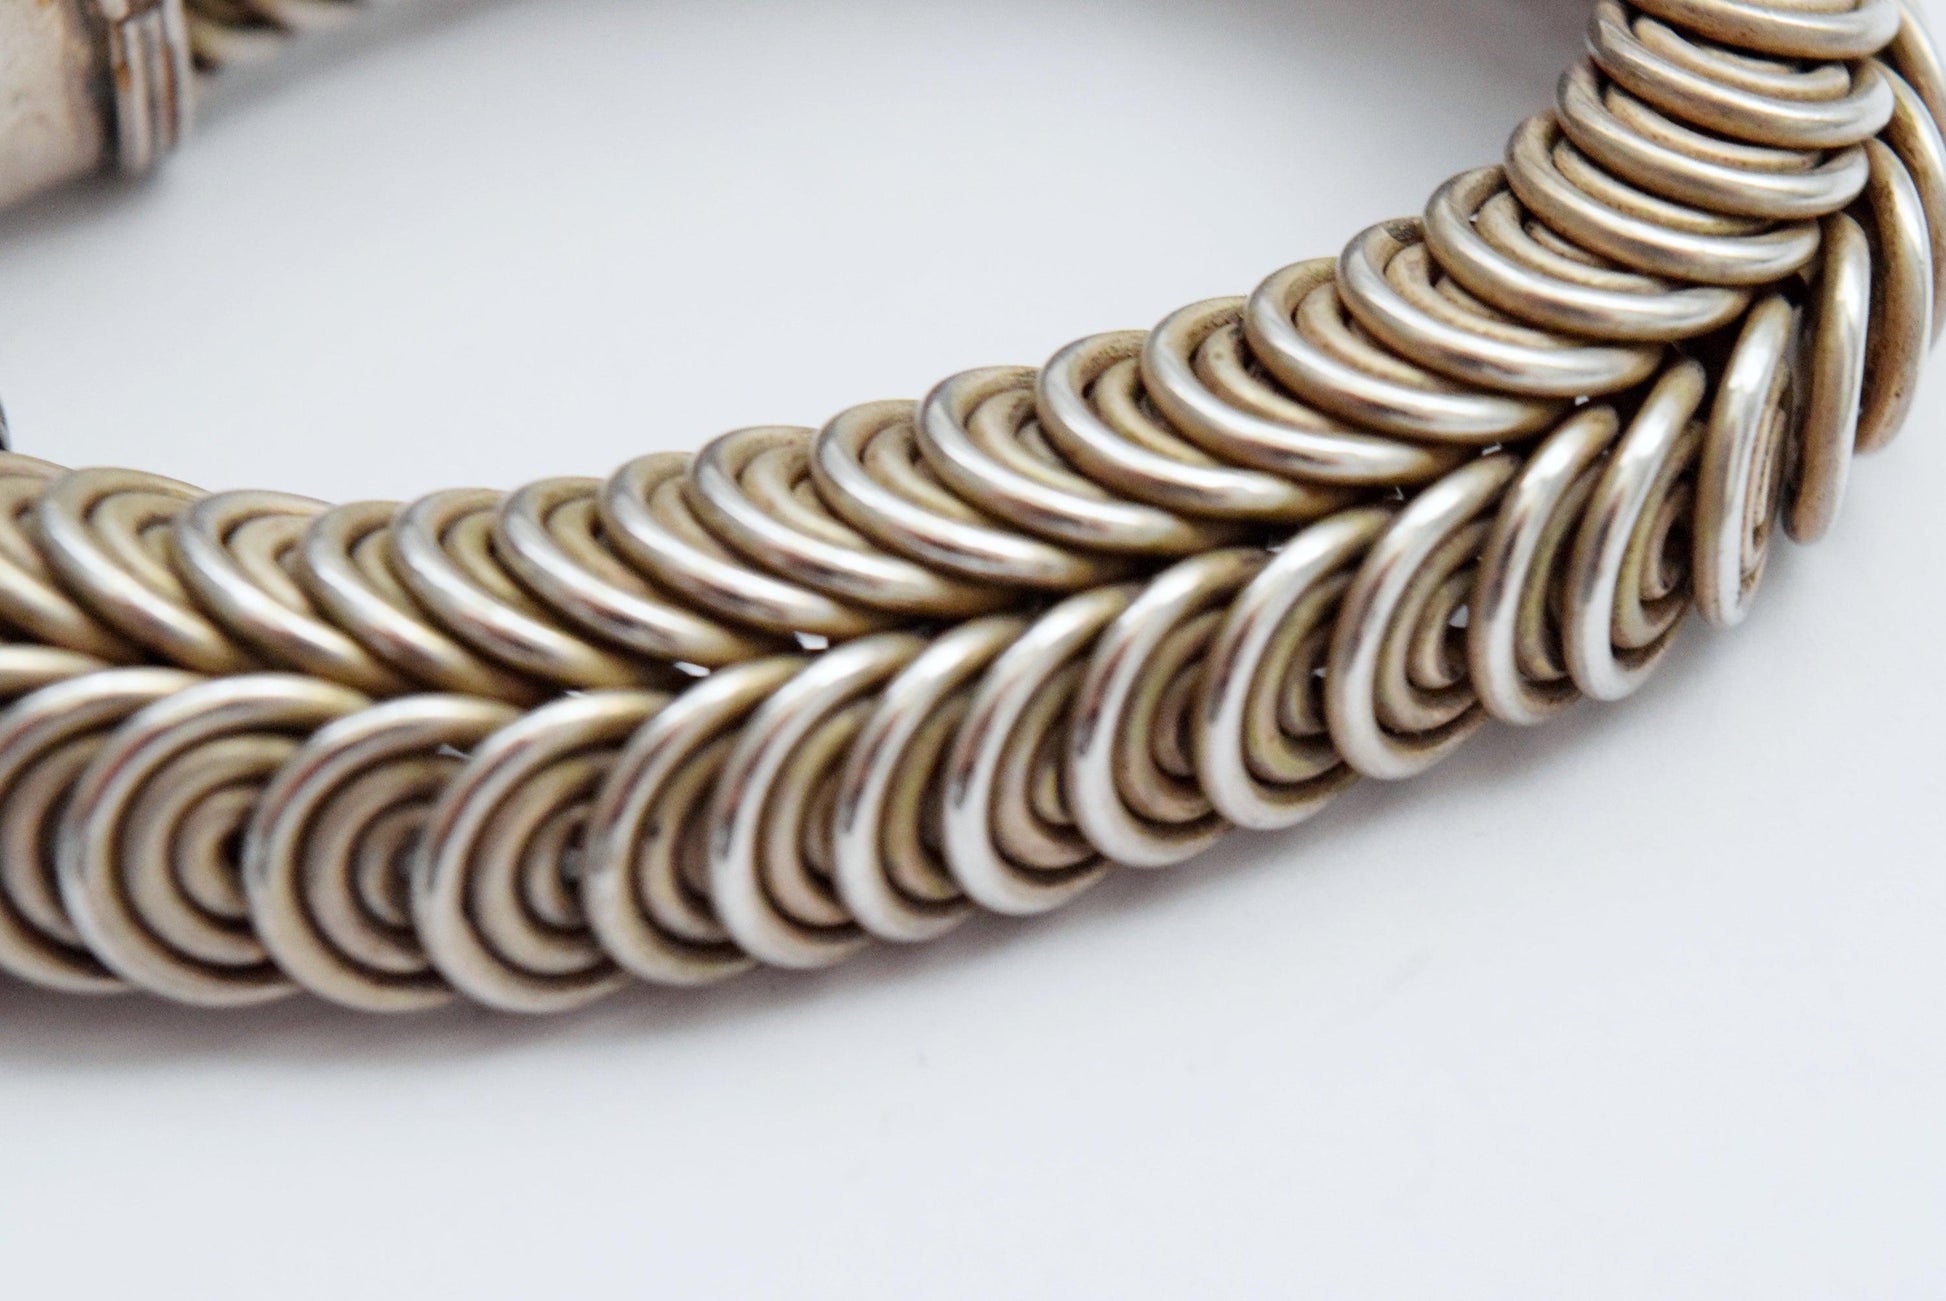 Vintage Silver Indian Twisted Wire Bracelet - Anteeka